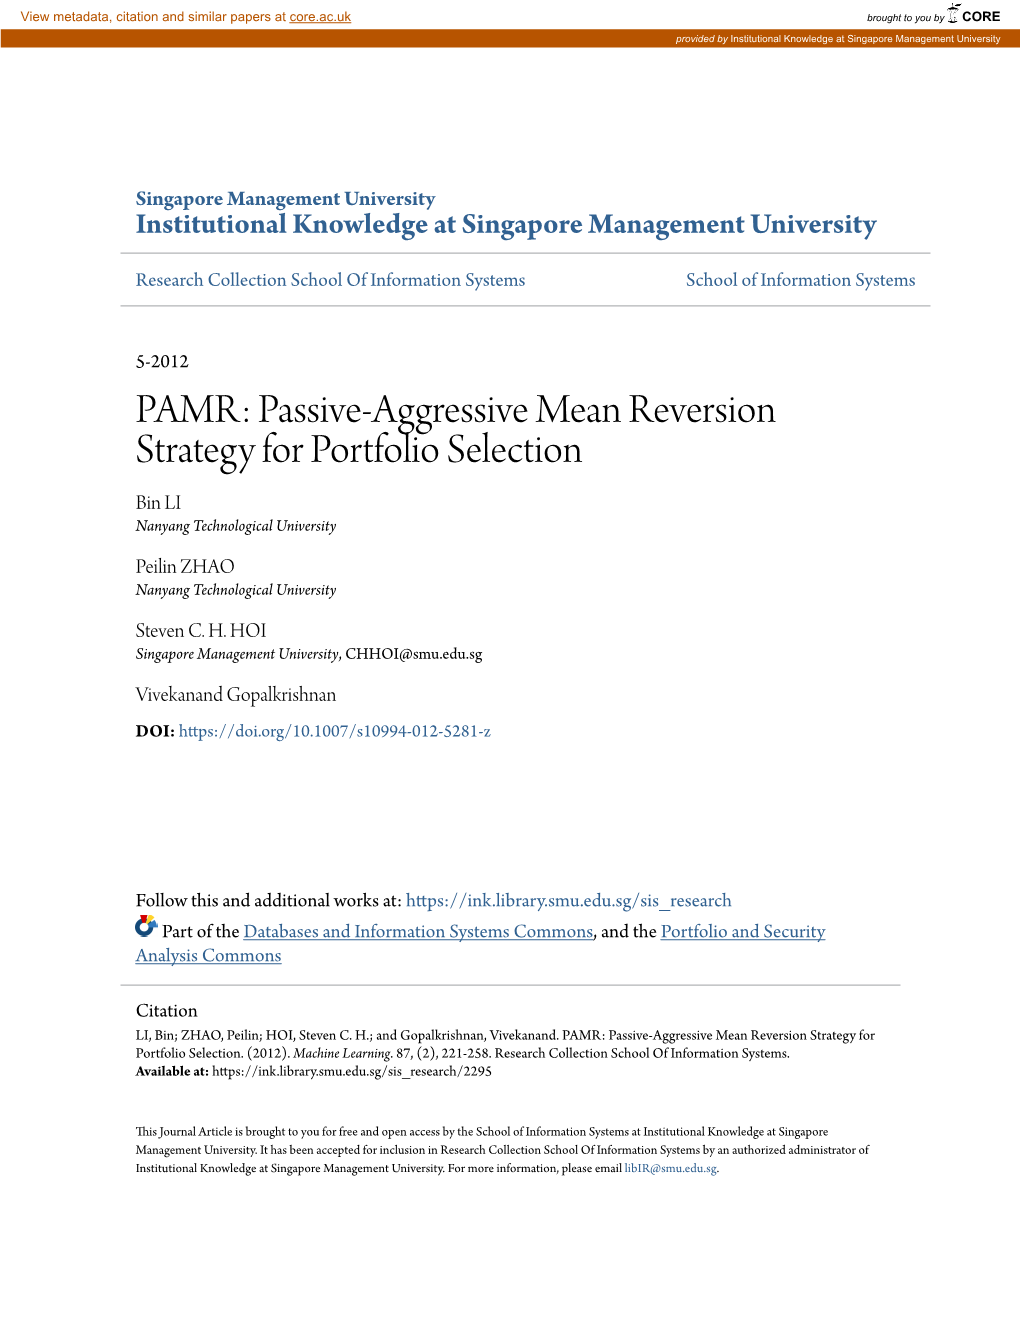 Passive-Aggressive Mean Reversion Strategy for Portfolio Selection Bin LI Nanyang Technological University